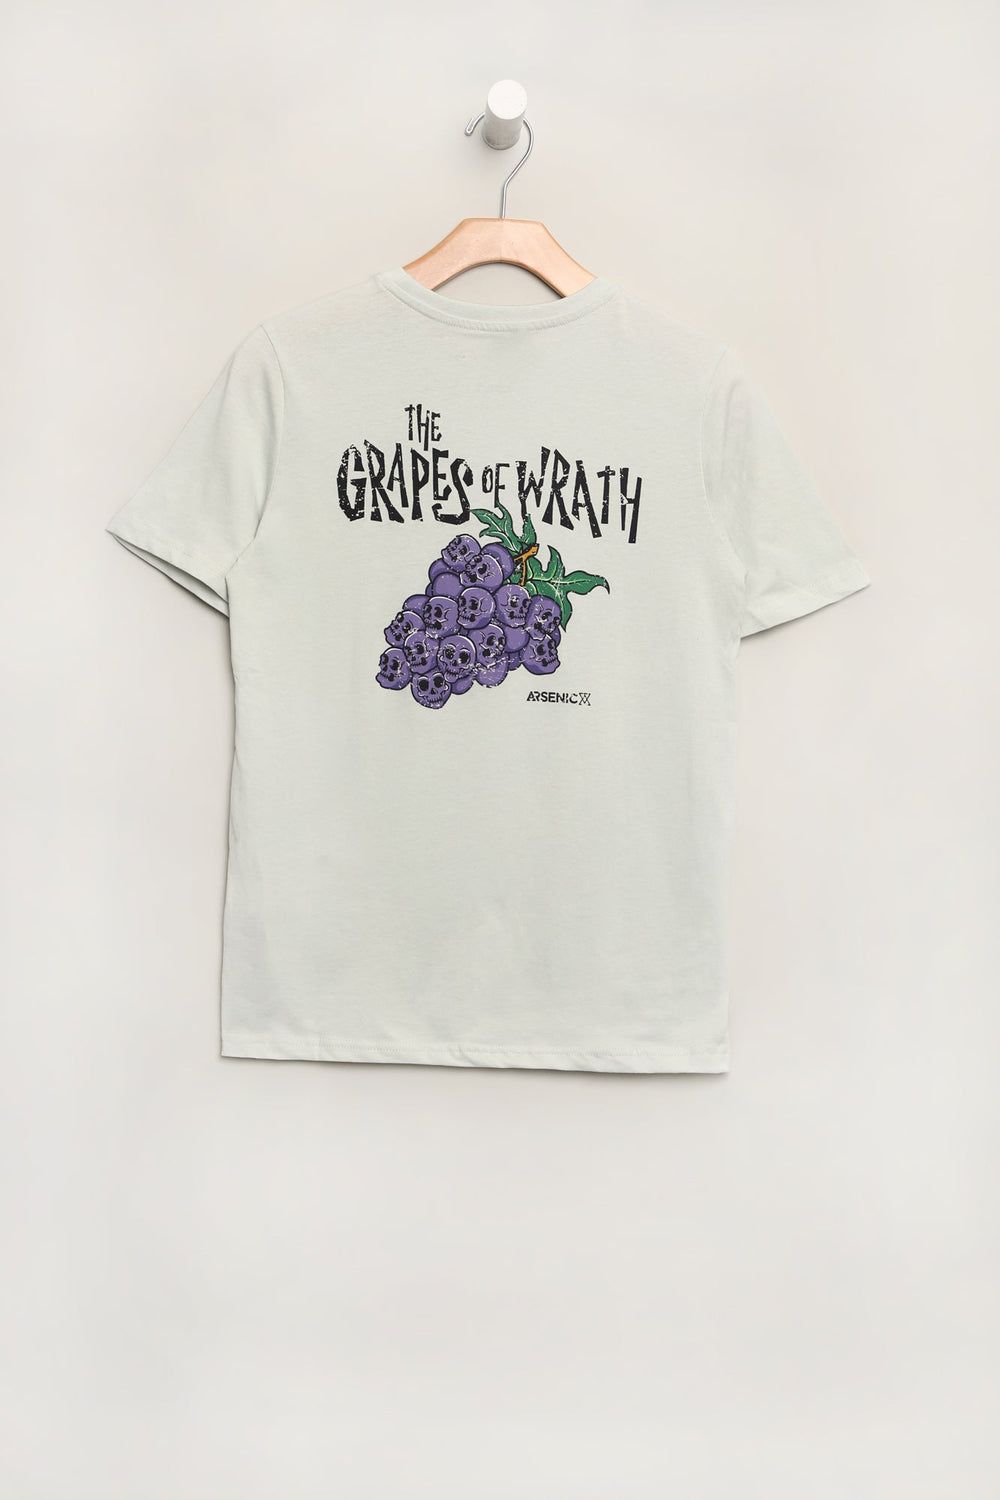 Arsenic Youth Grape Skulls T-Shirt Arsenic Youth Grape Skulls T-Shirt